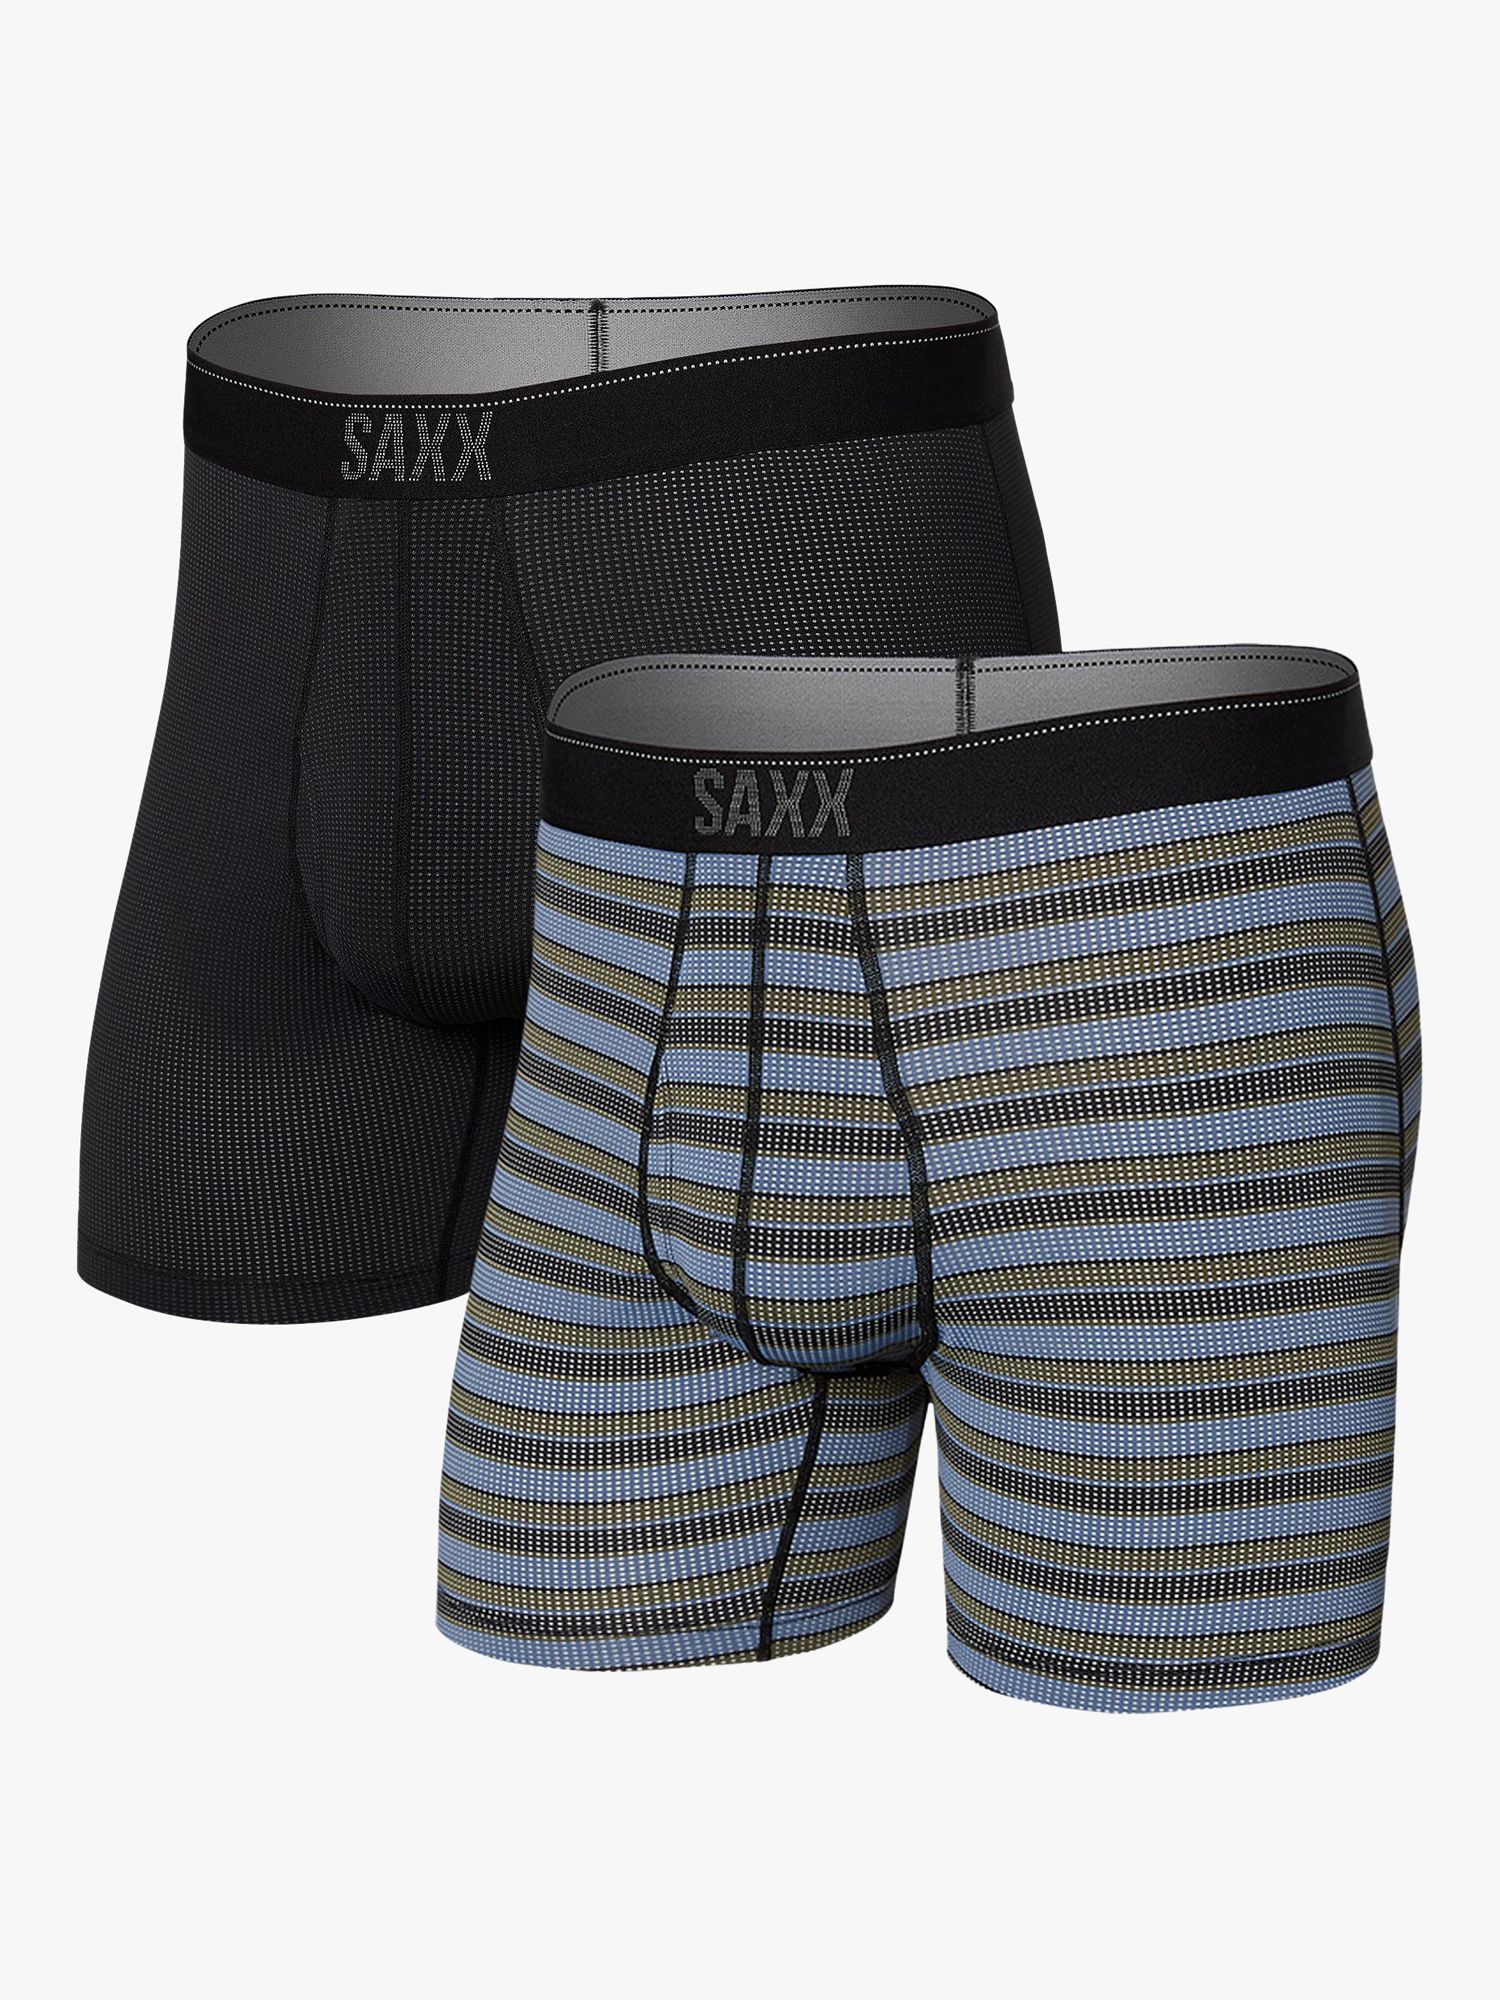 SAXX Quest Slim Fit Plain & Stripe Trunks, Pack of 2, Black/Grey Multi, S